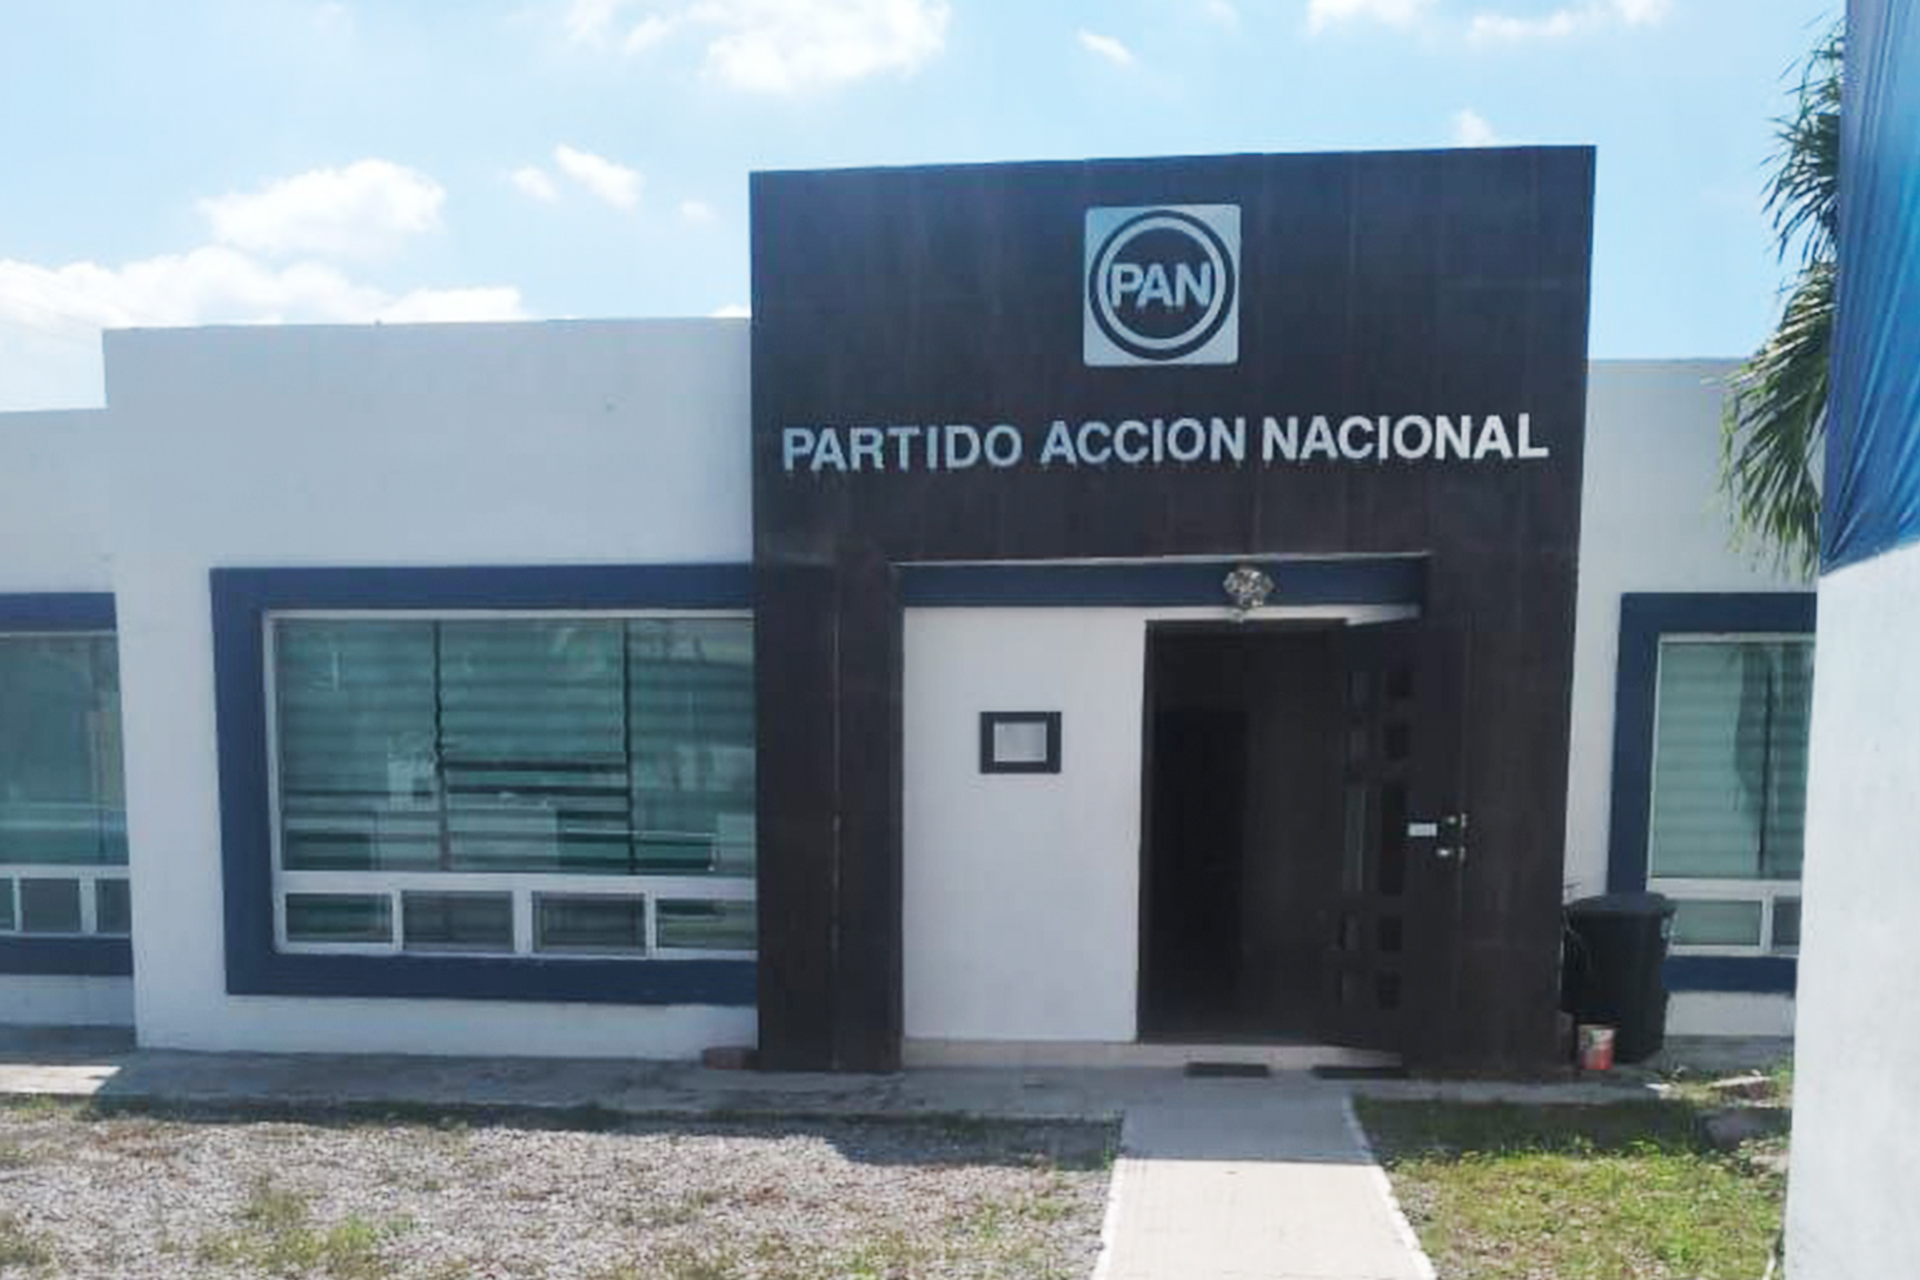 https://pantamaulipas.org/wp-content/uploads/2021/12/location-madero.jpg